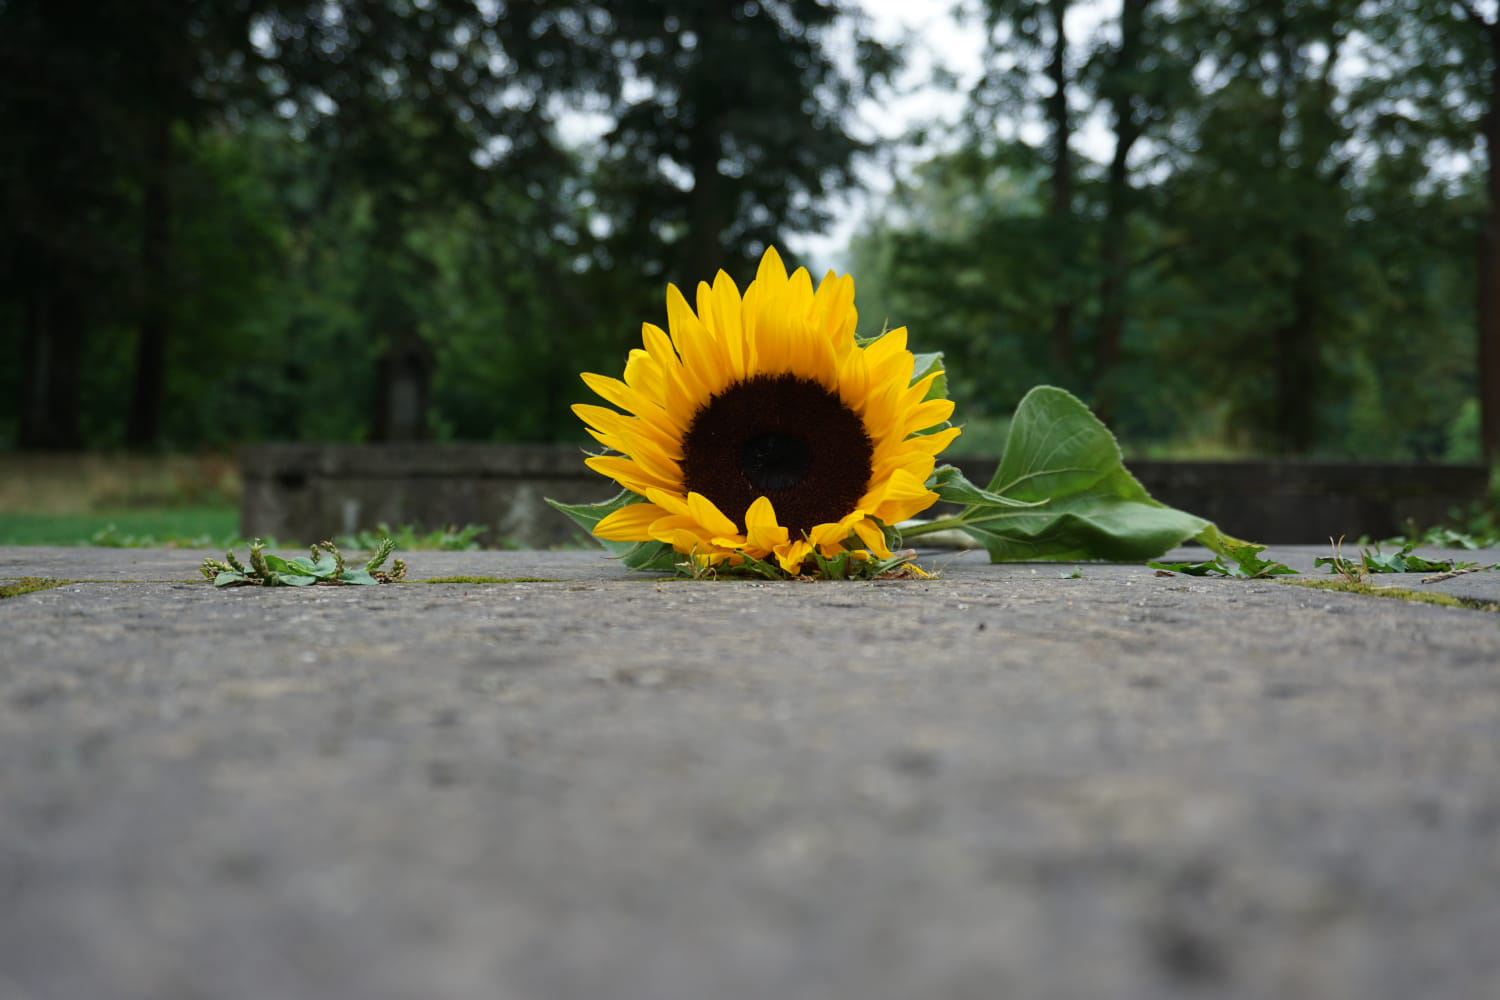 Naturfotografie: Sonnenblume auf Asphalt